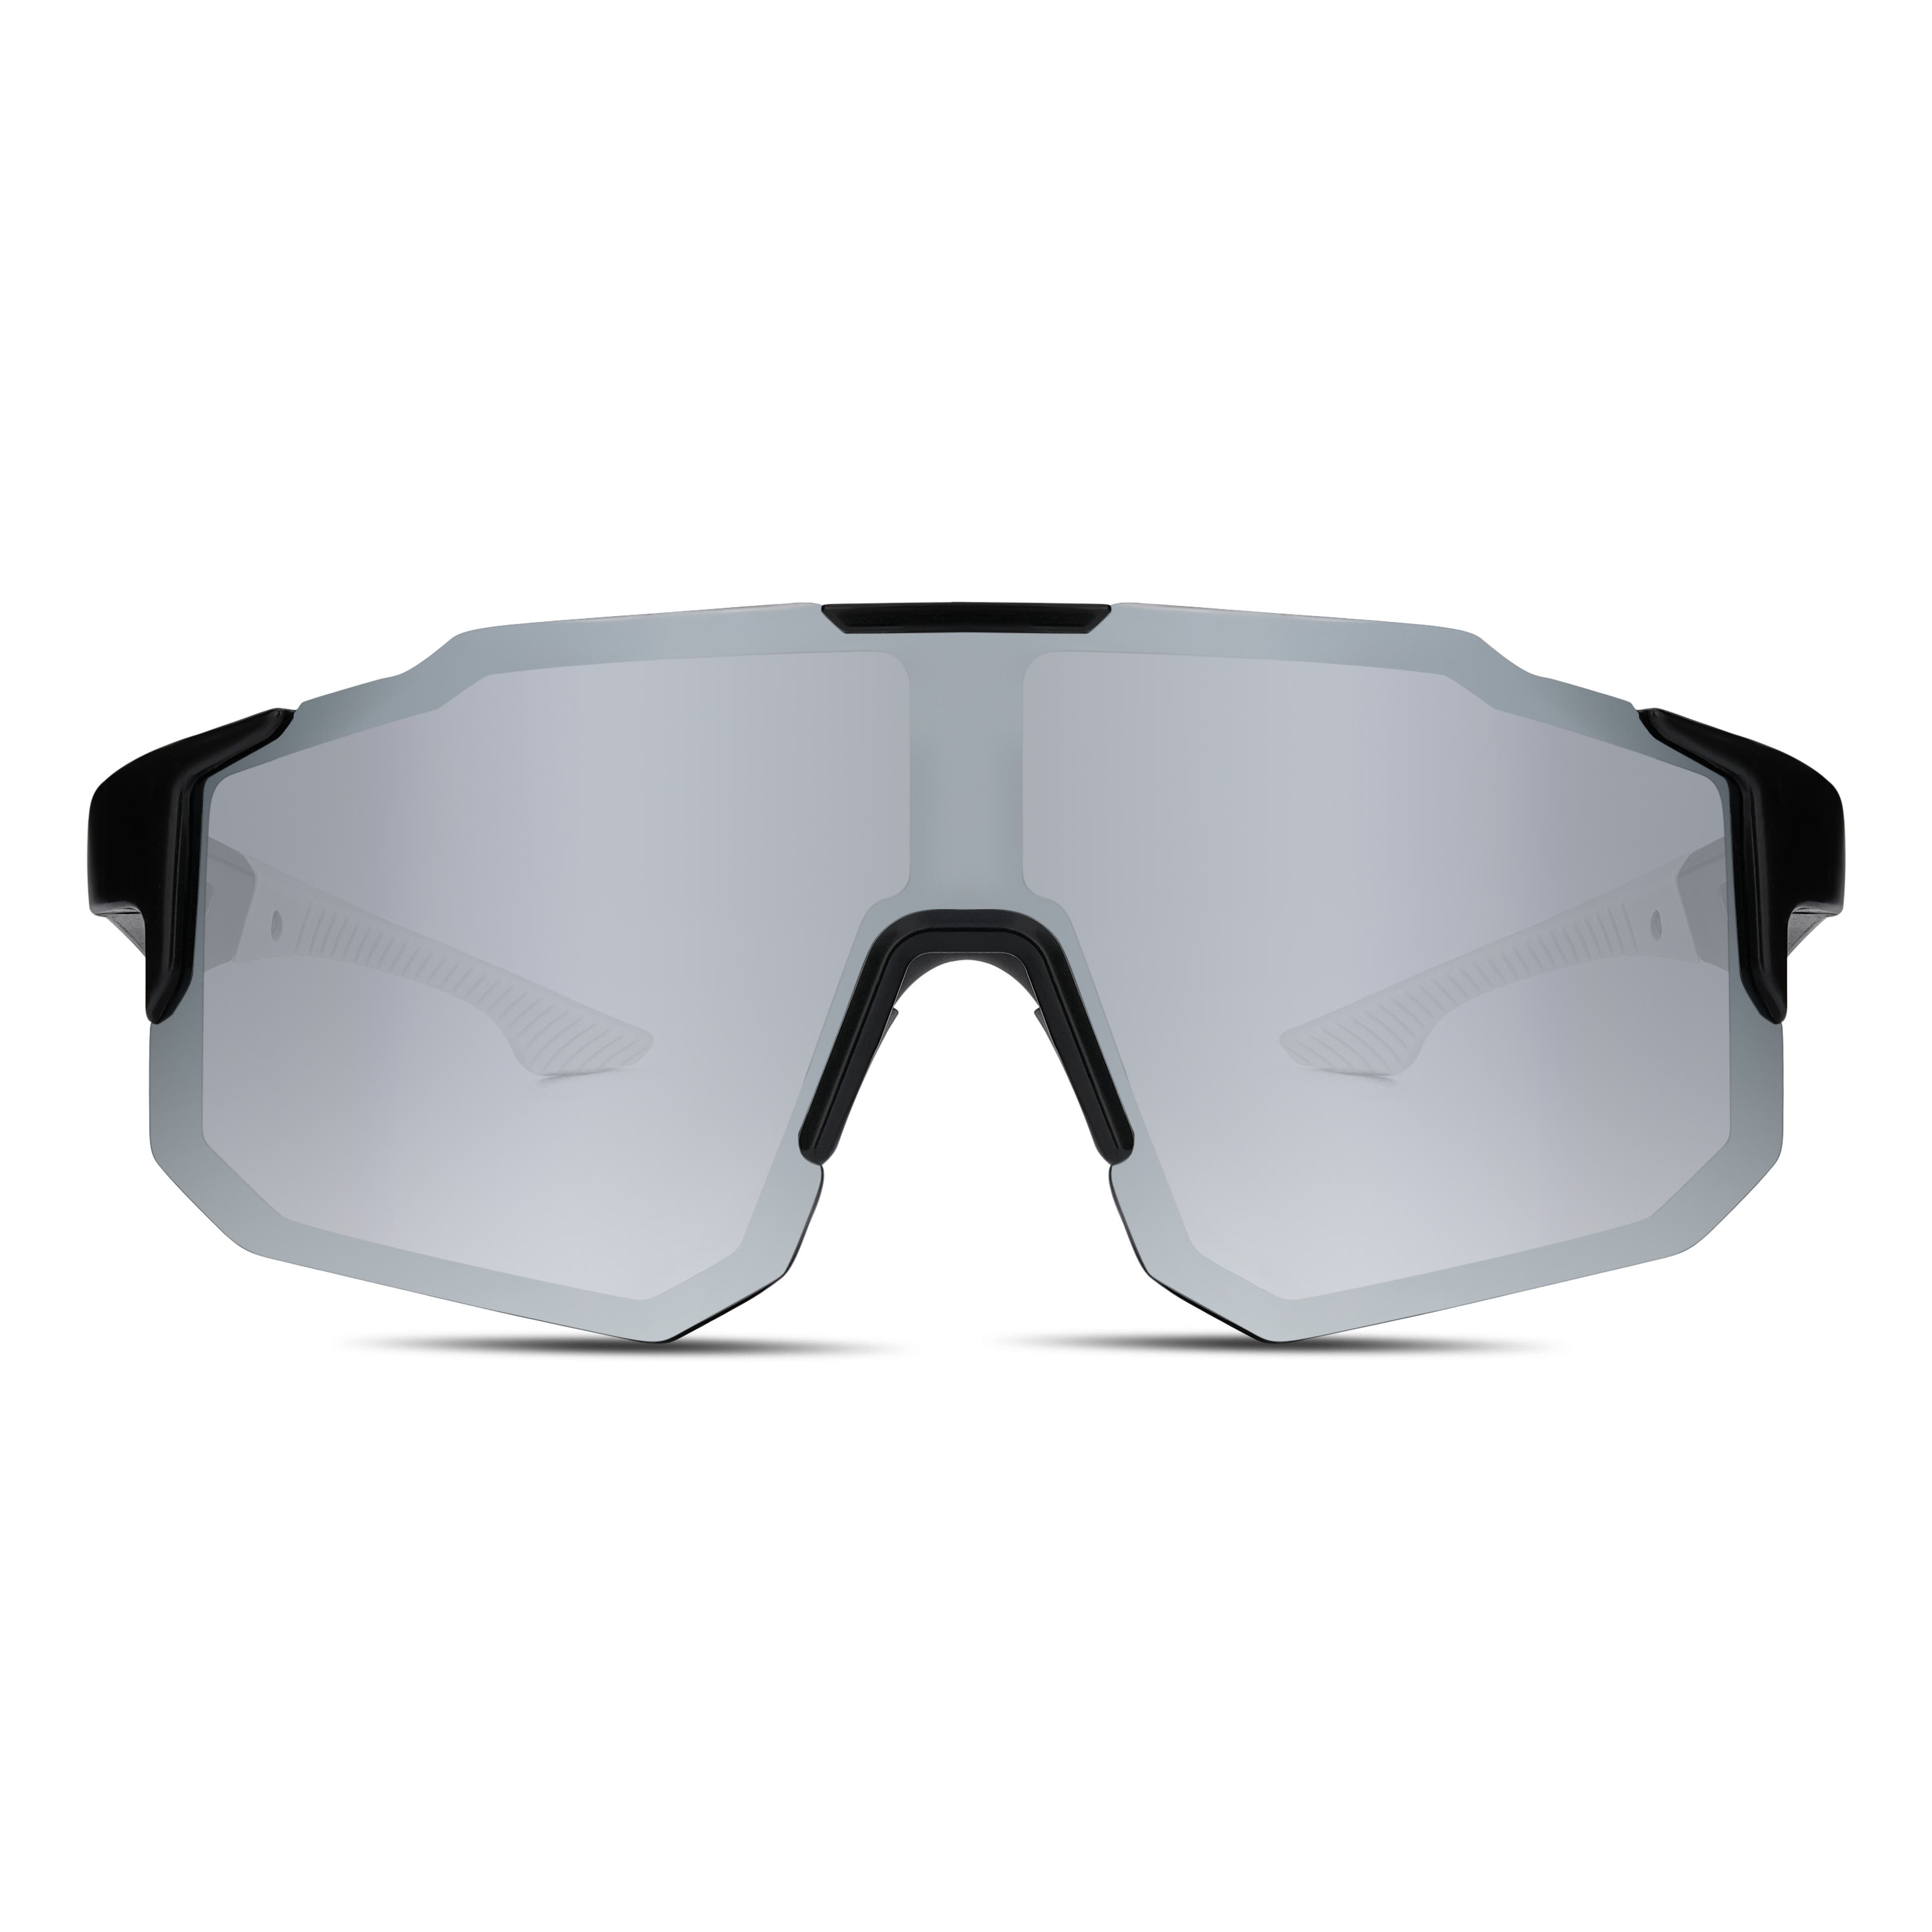 Zwart-grijze Wraparound Sportzonnebril